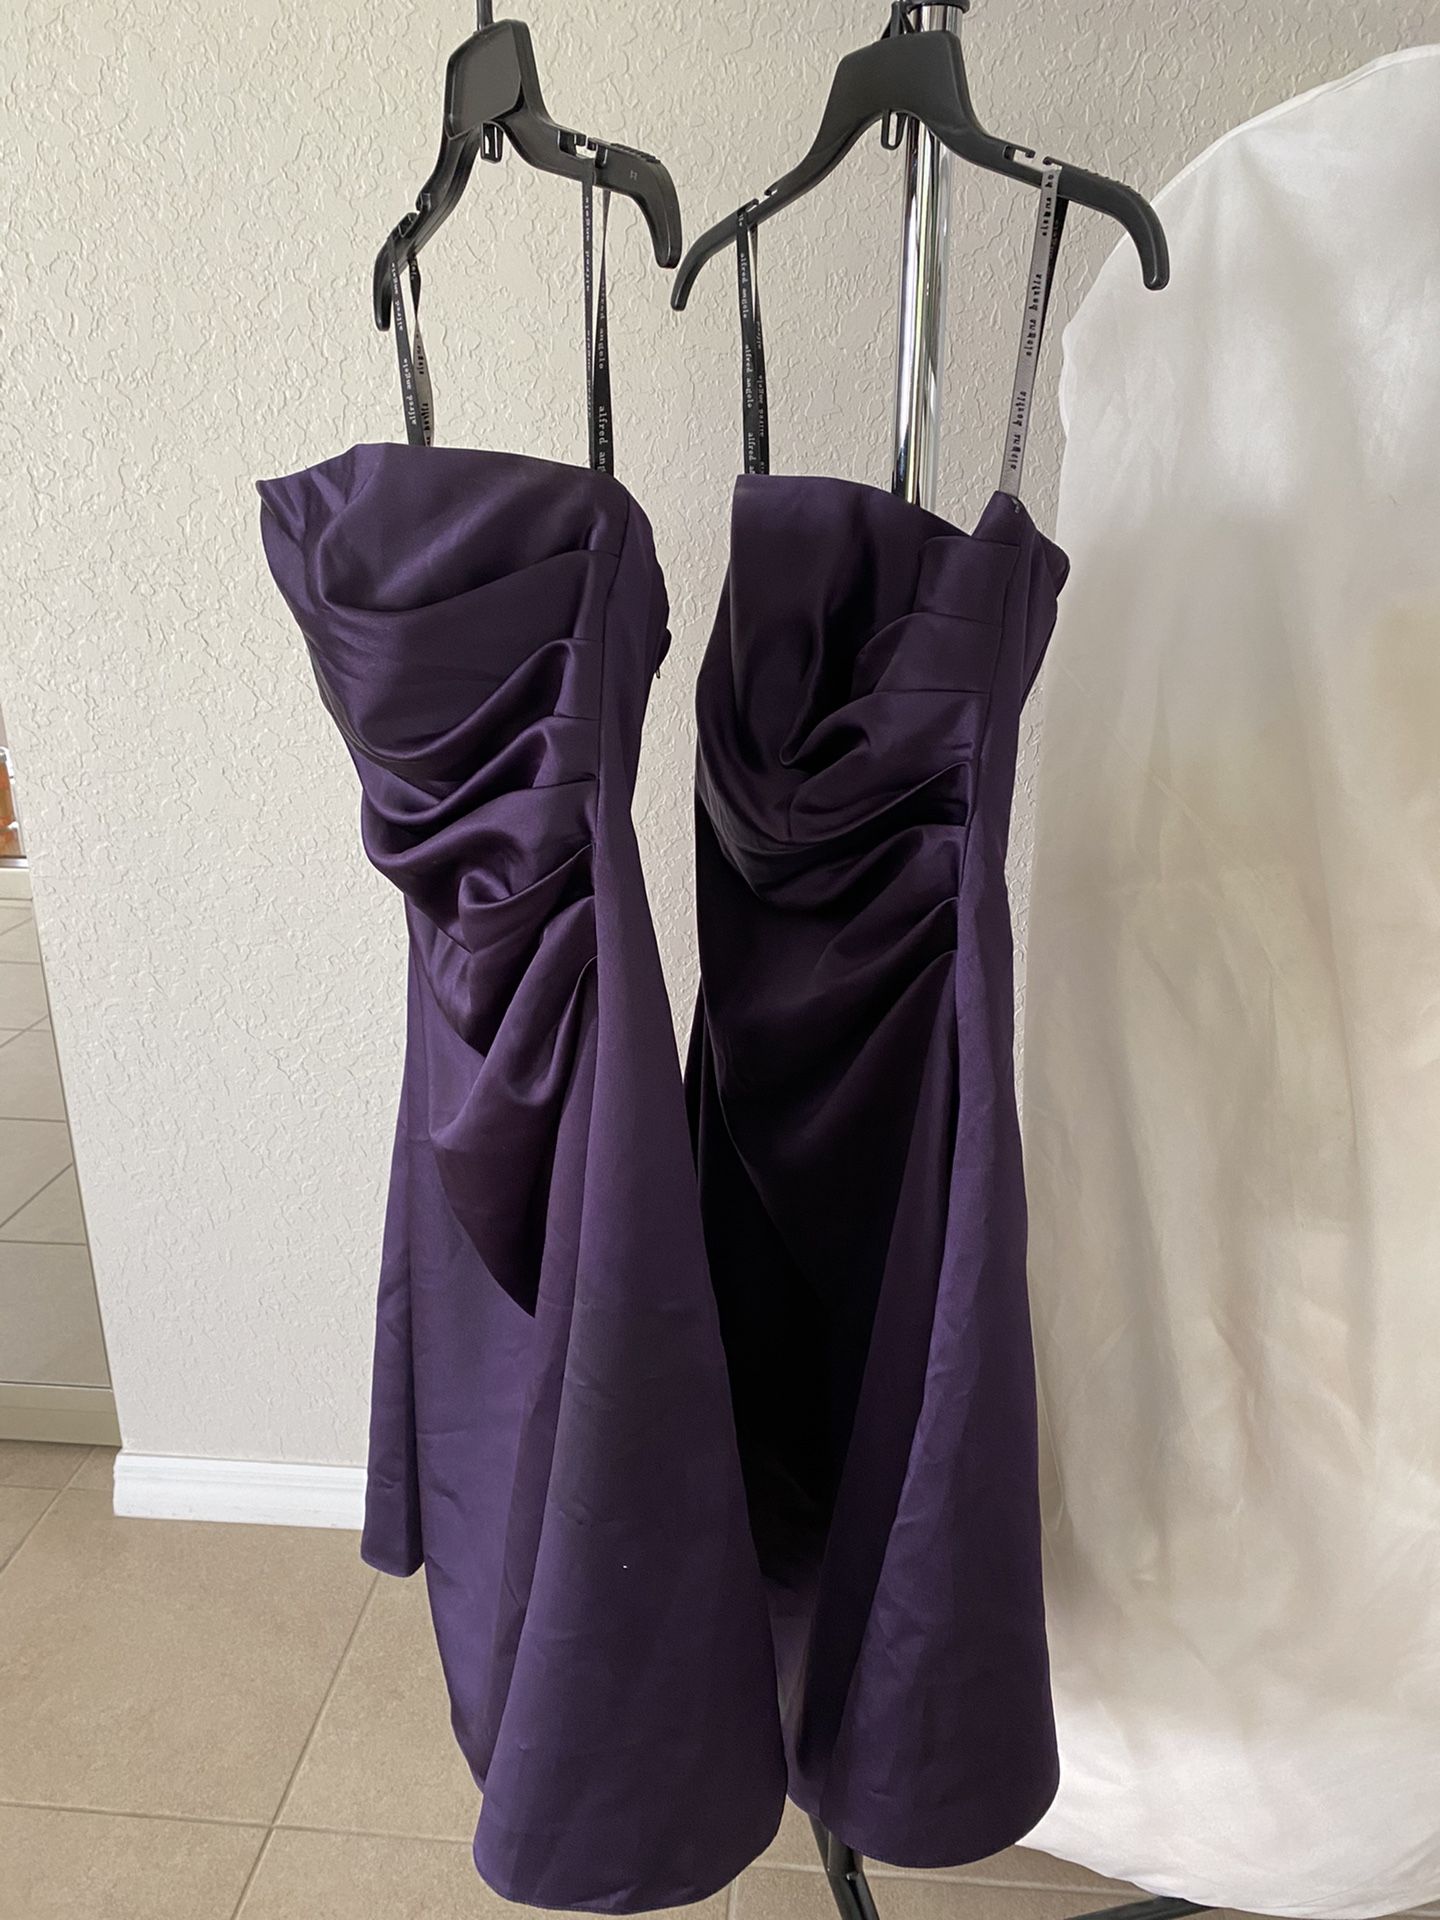 Two Lavender Bridesmaid Dresses 